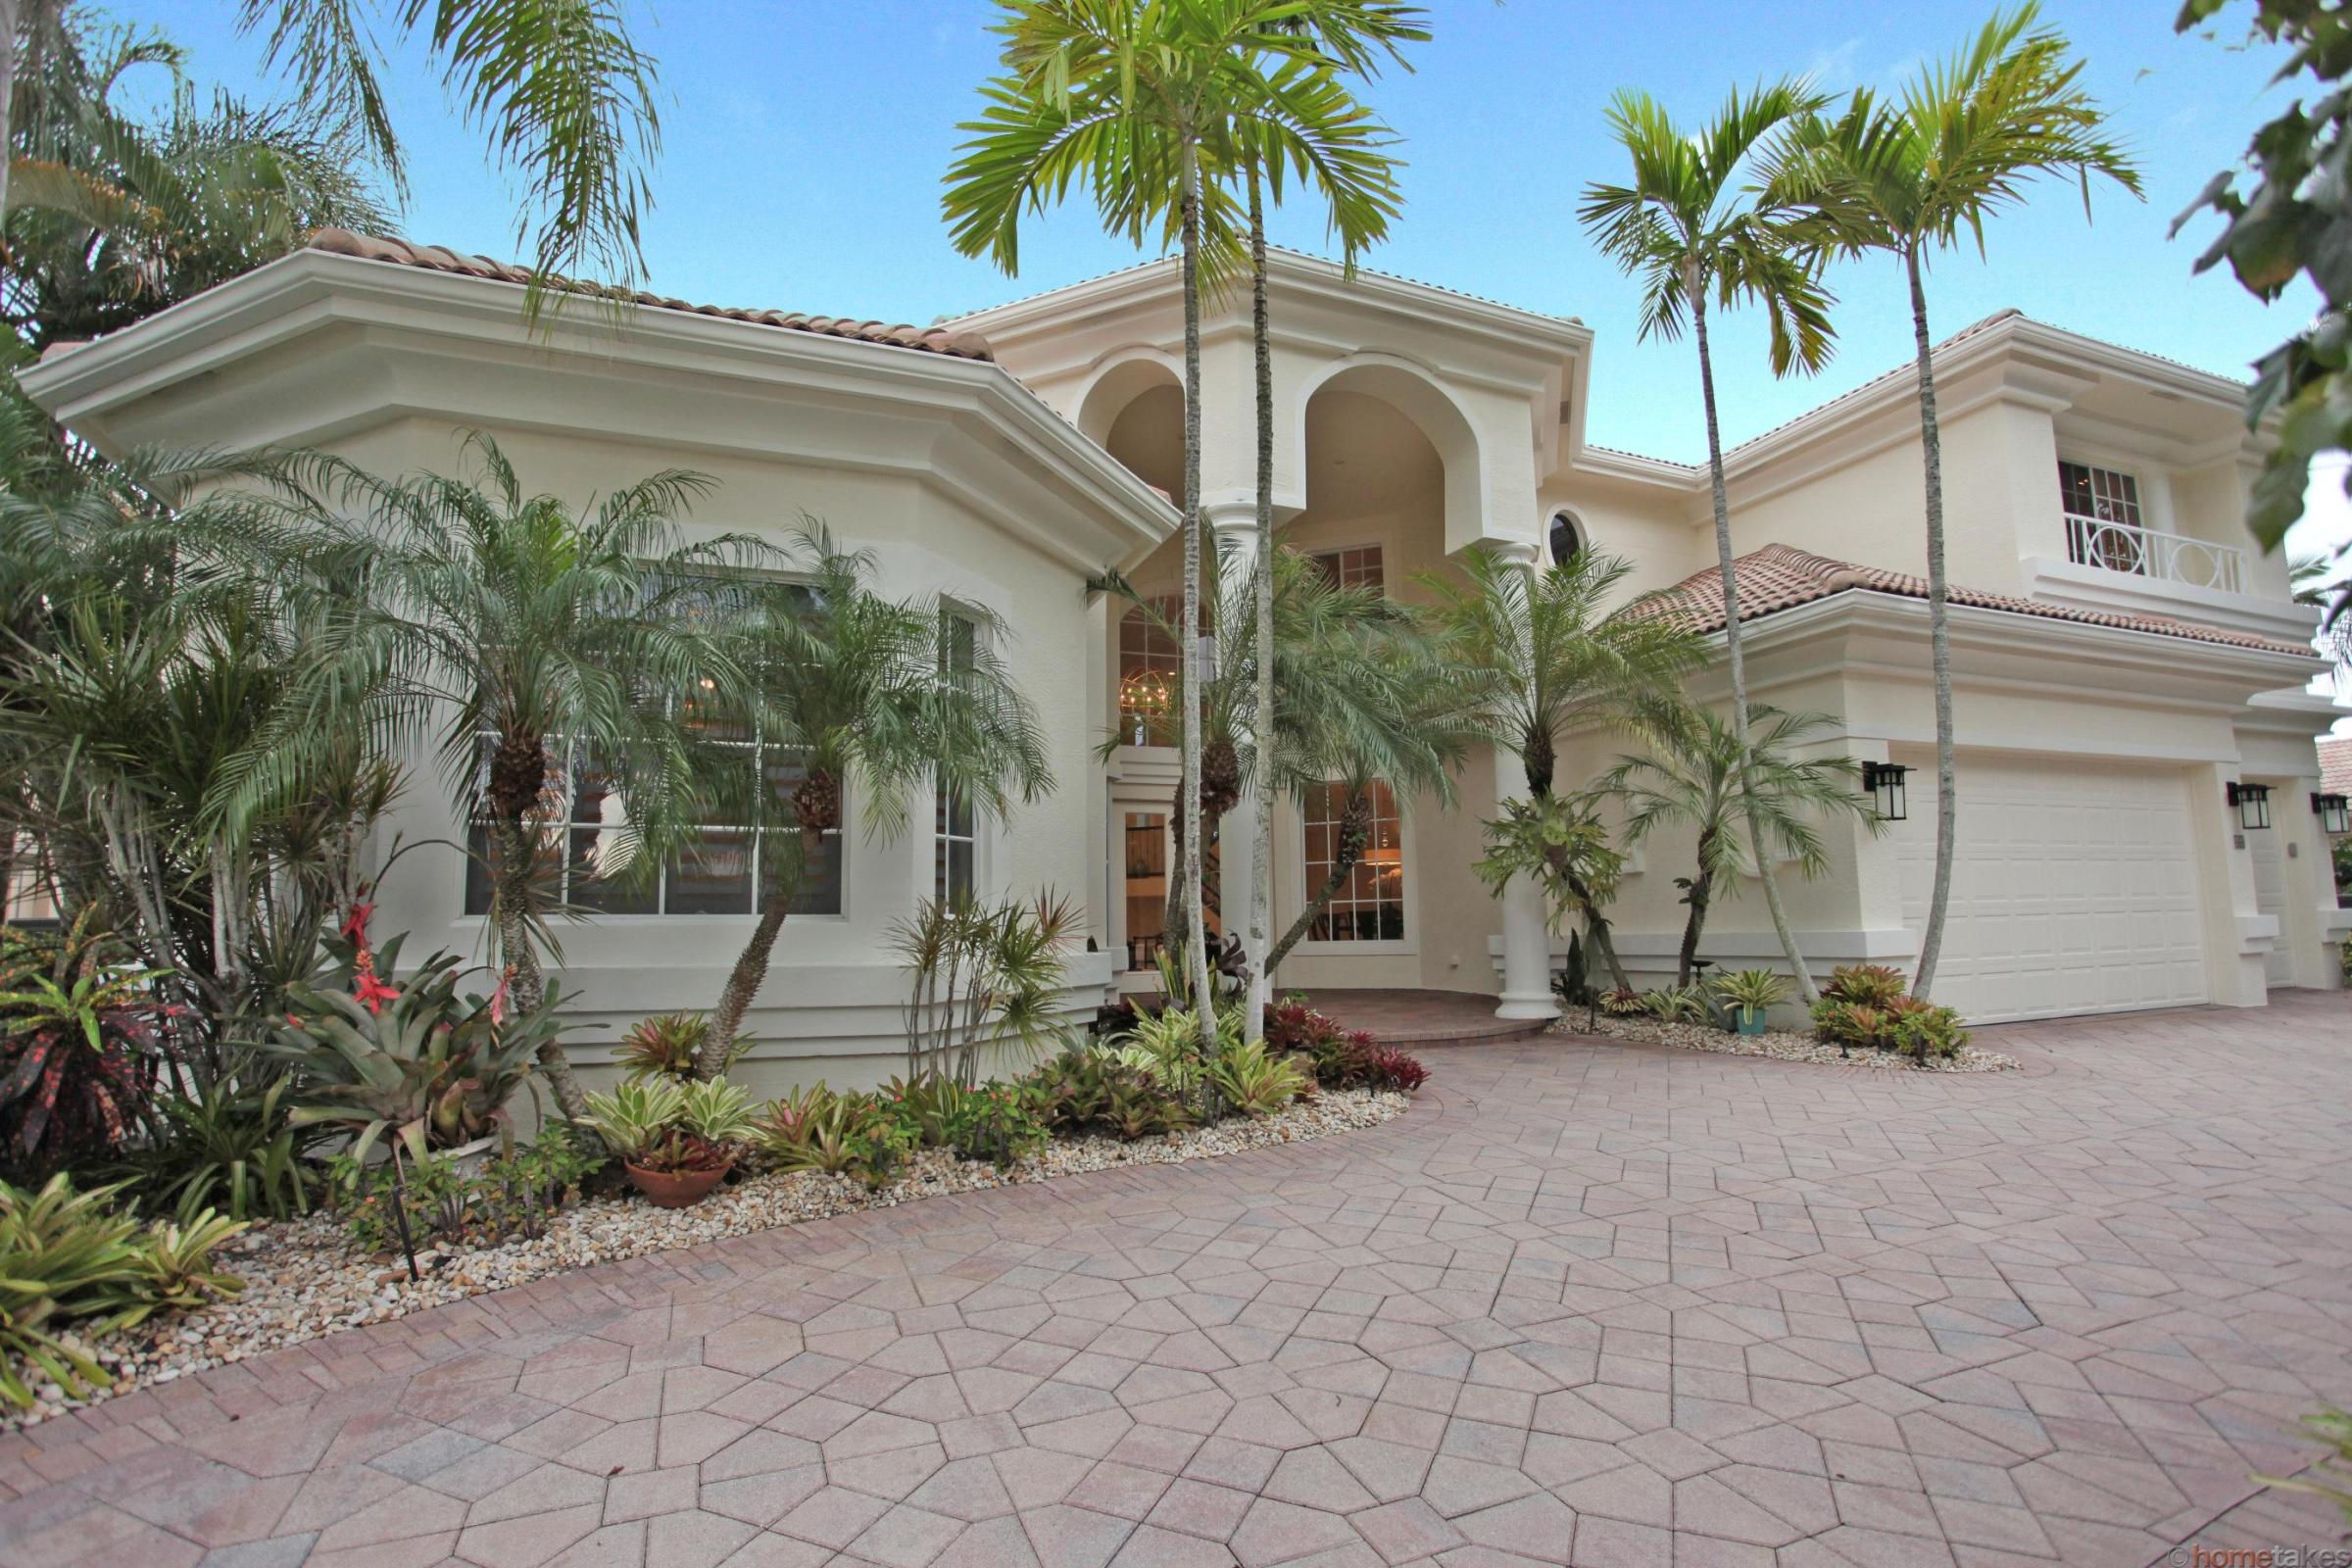 Coquina Estates BallenIsles Homes For Sale in Palm Beach Gardens